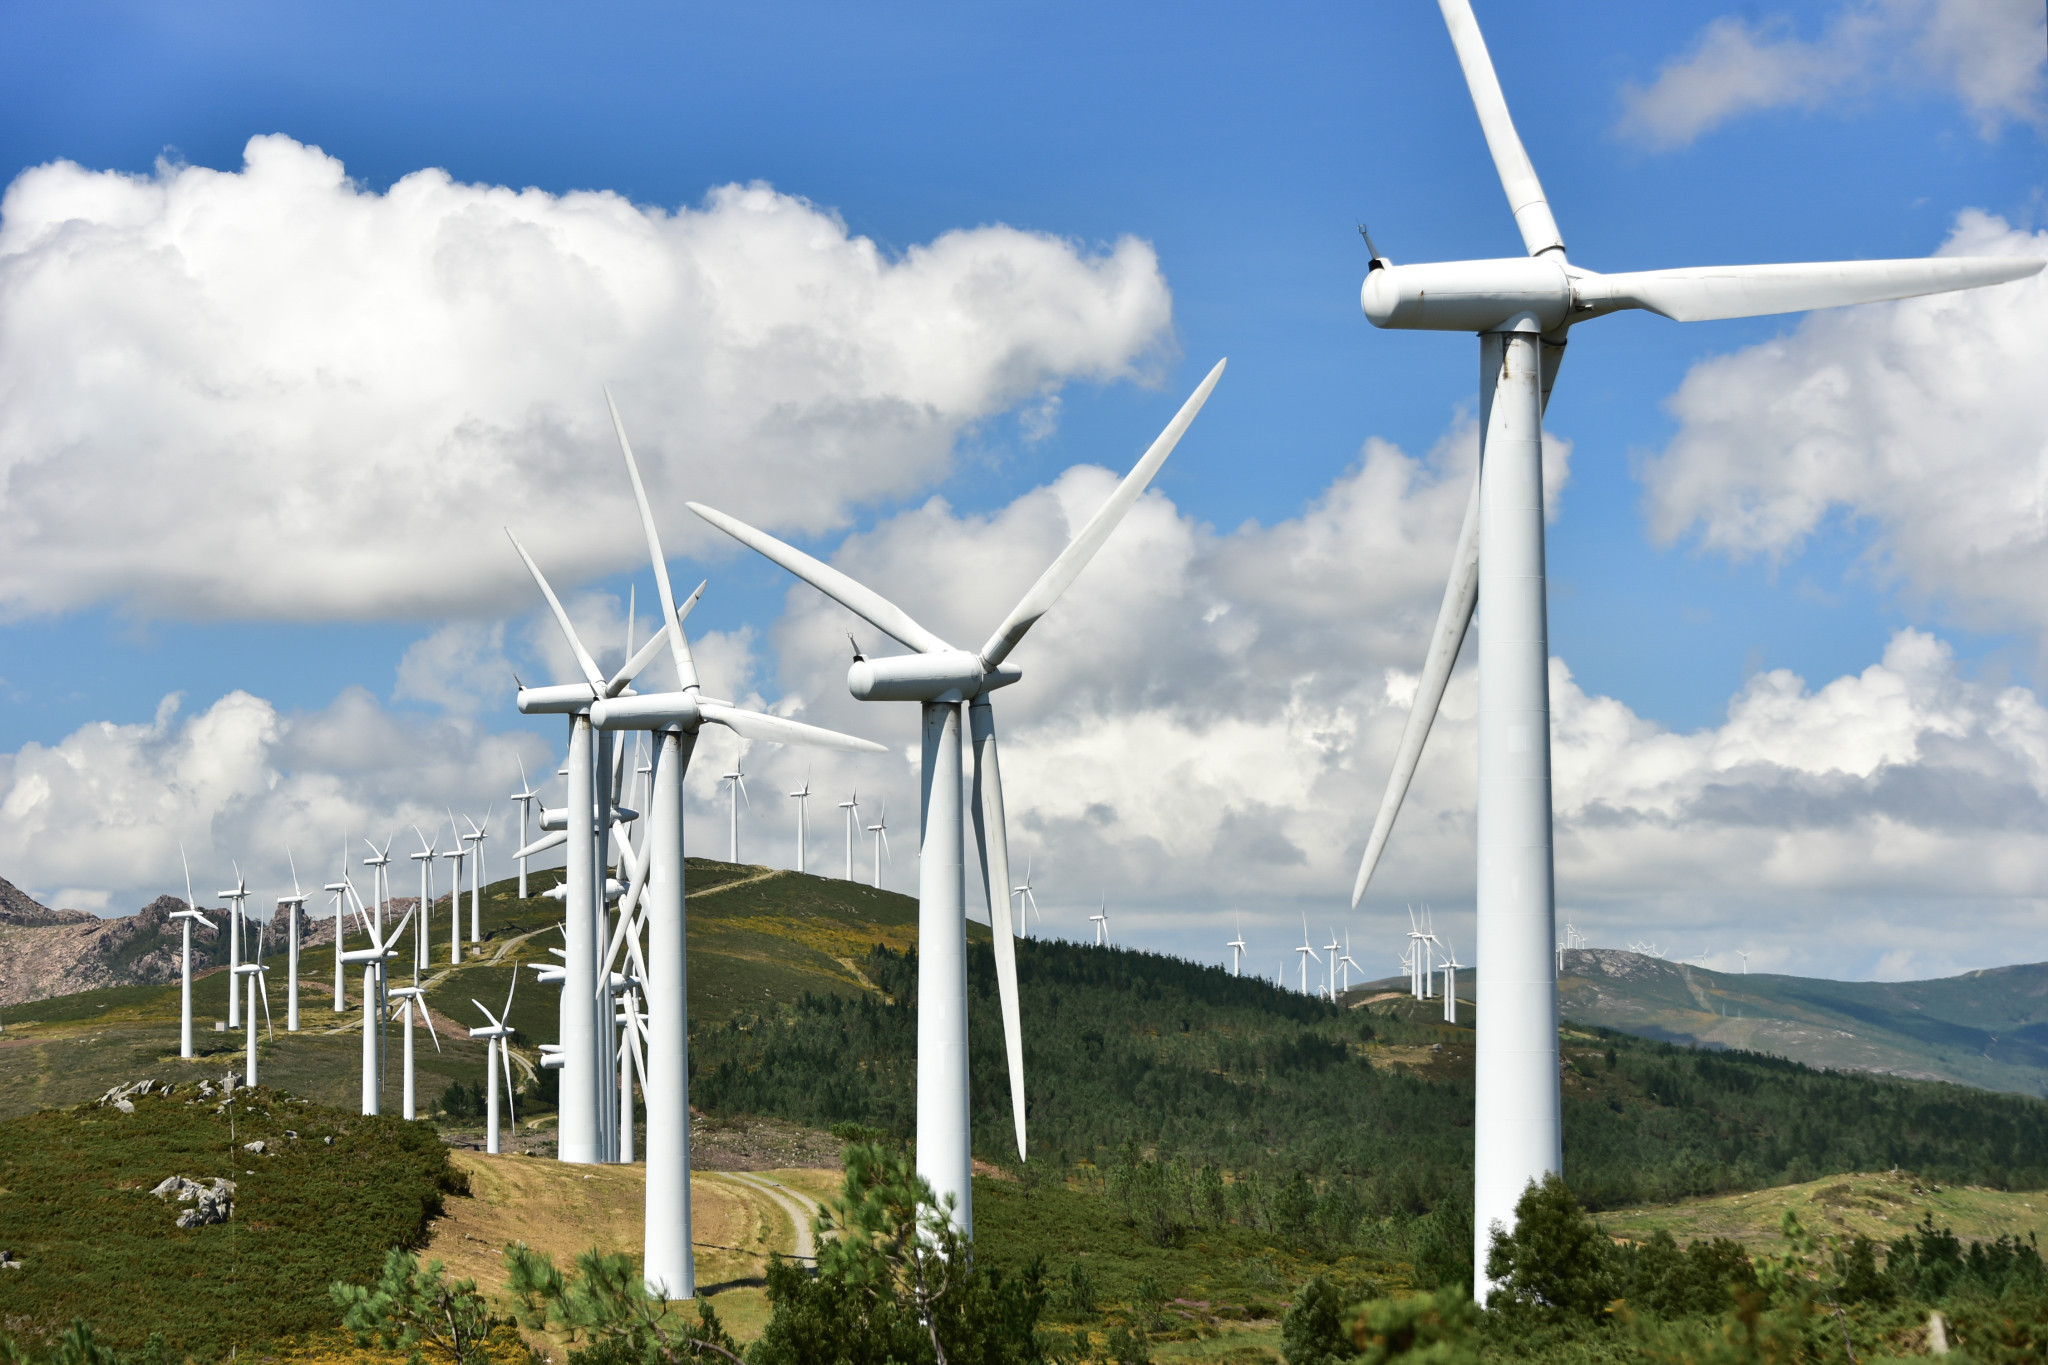 Wind farm framework under review - feature photo